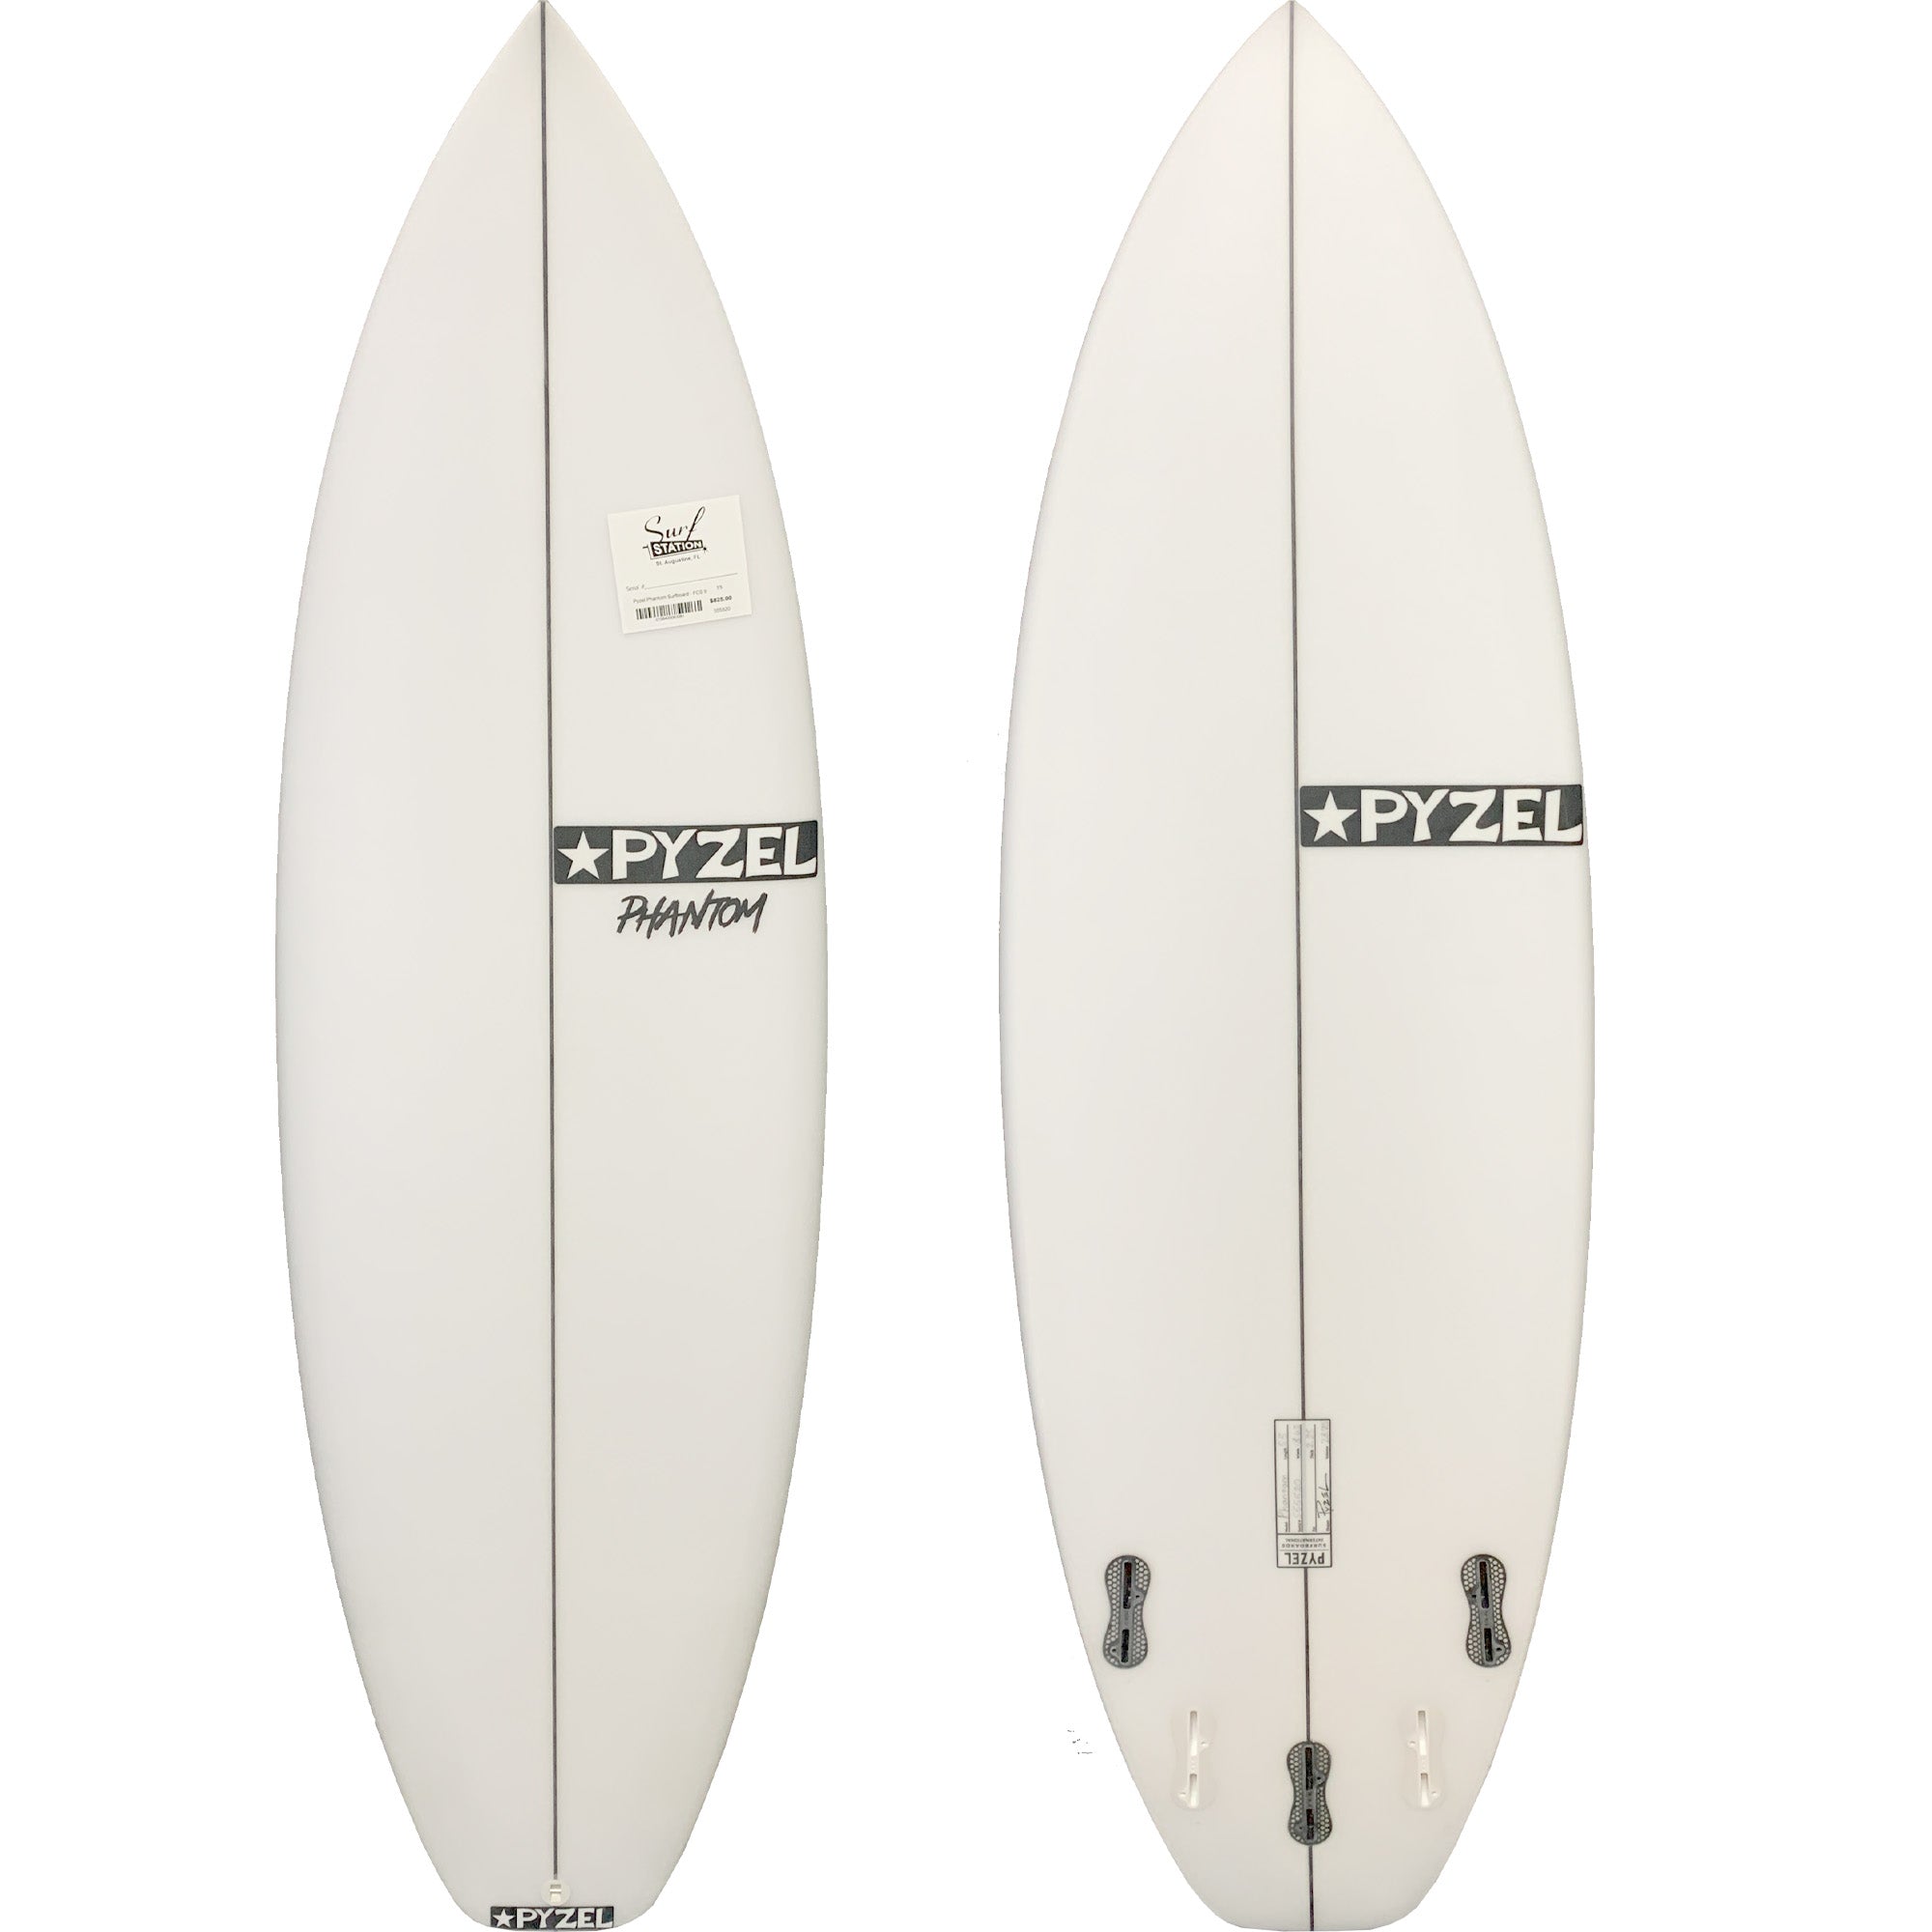 Pyzel Phantom Surfboard - FCS II